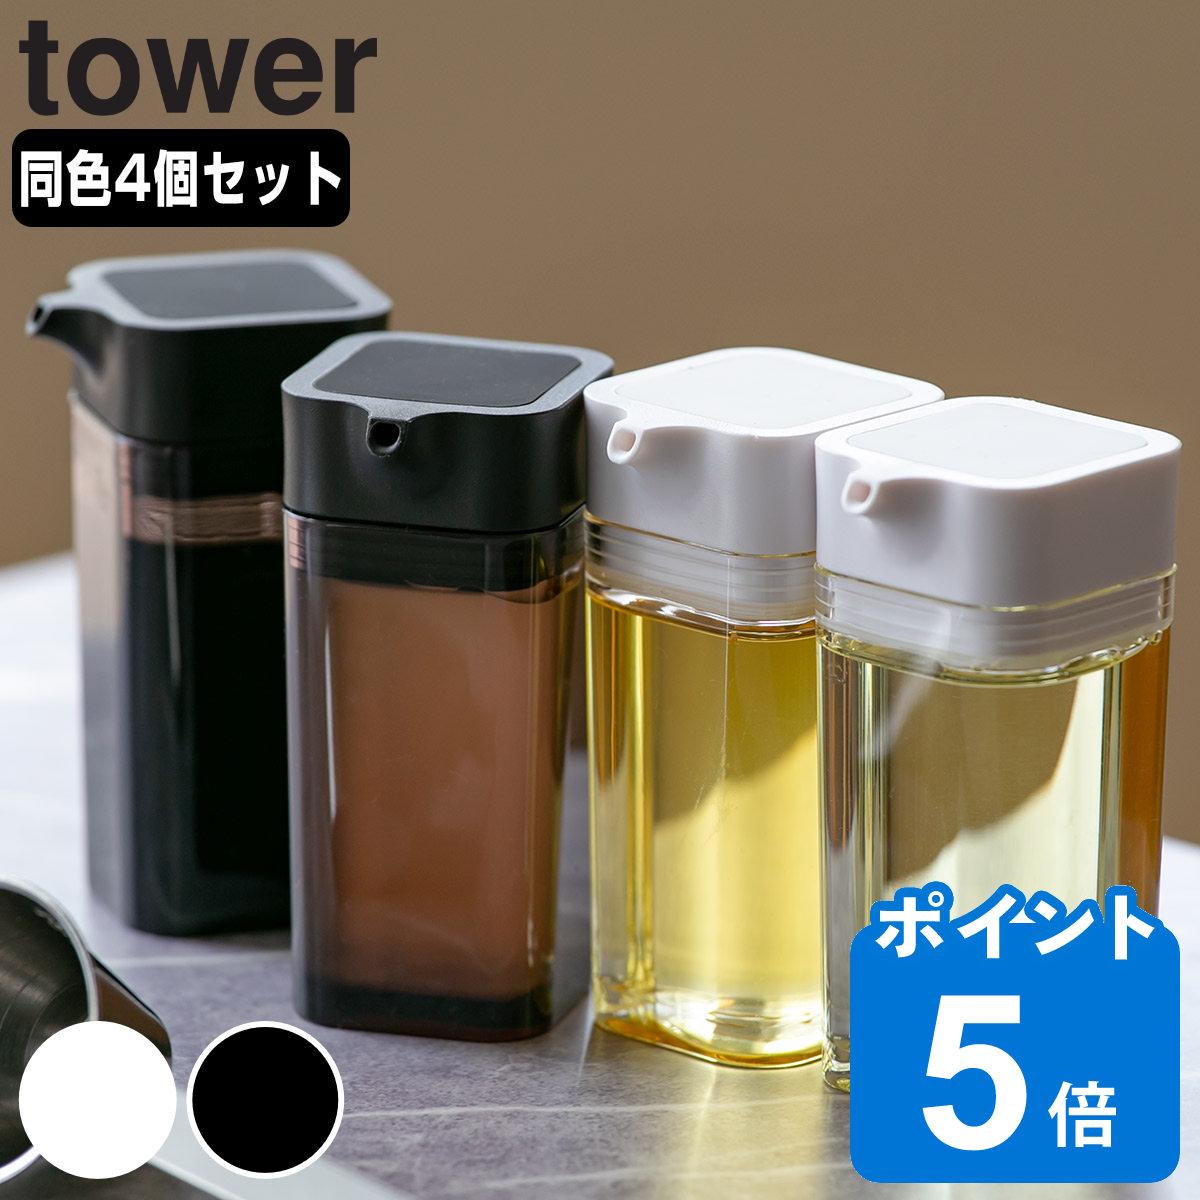 tower プッシュ式醤油差し タワー 同色4個セット